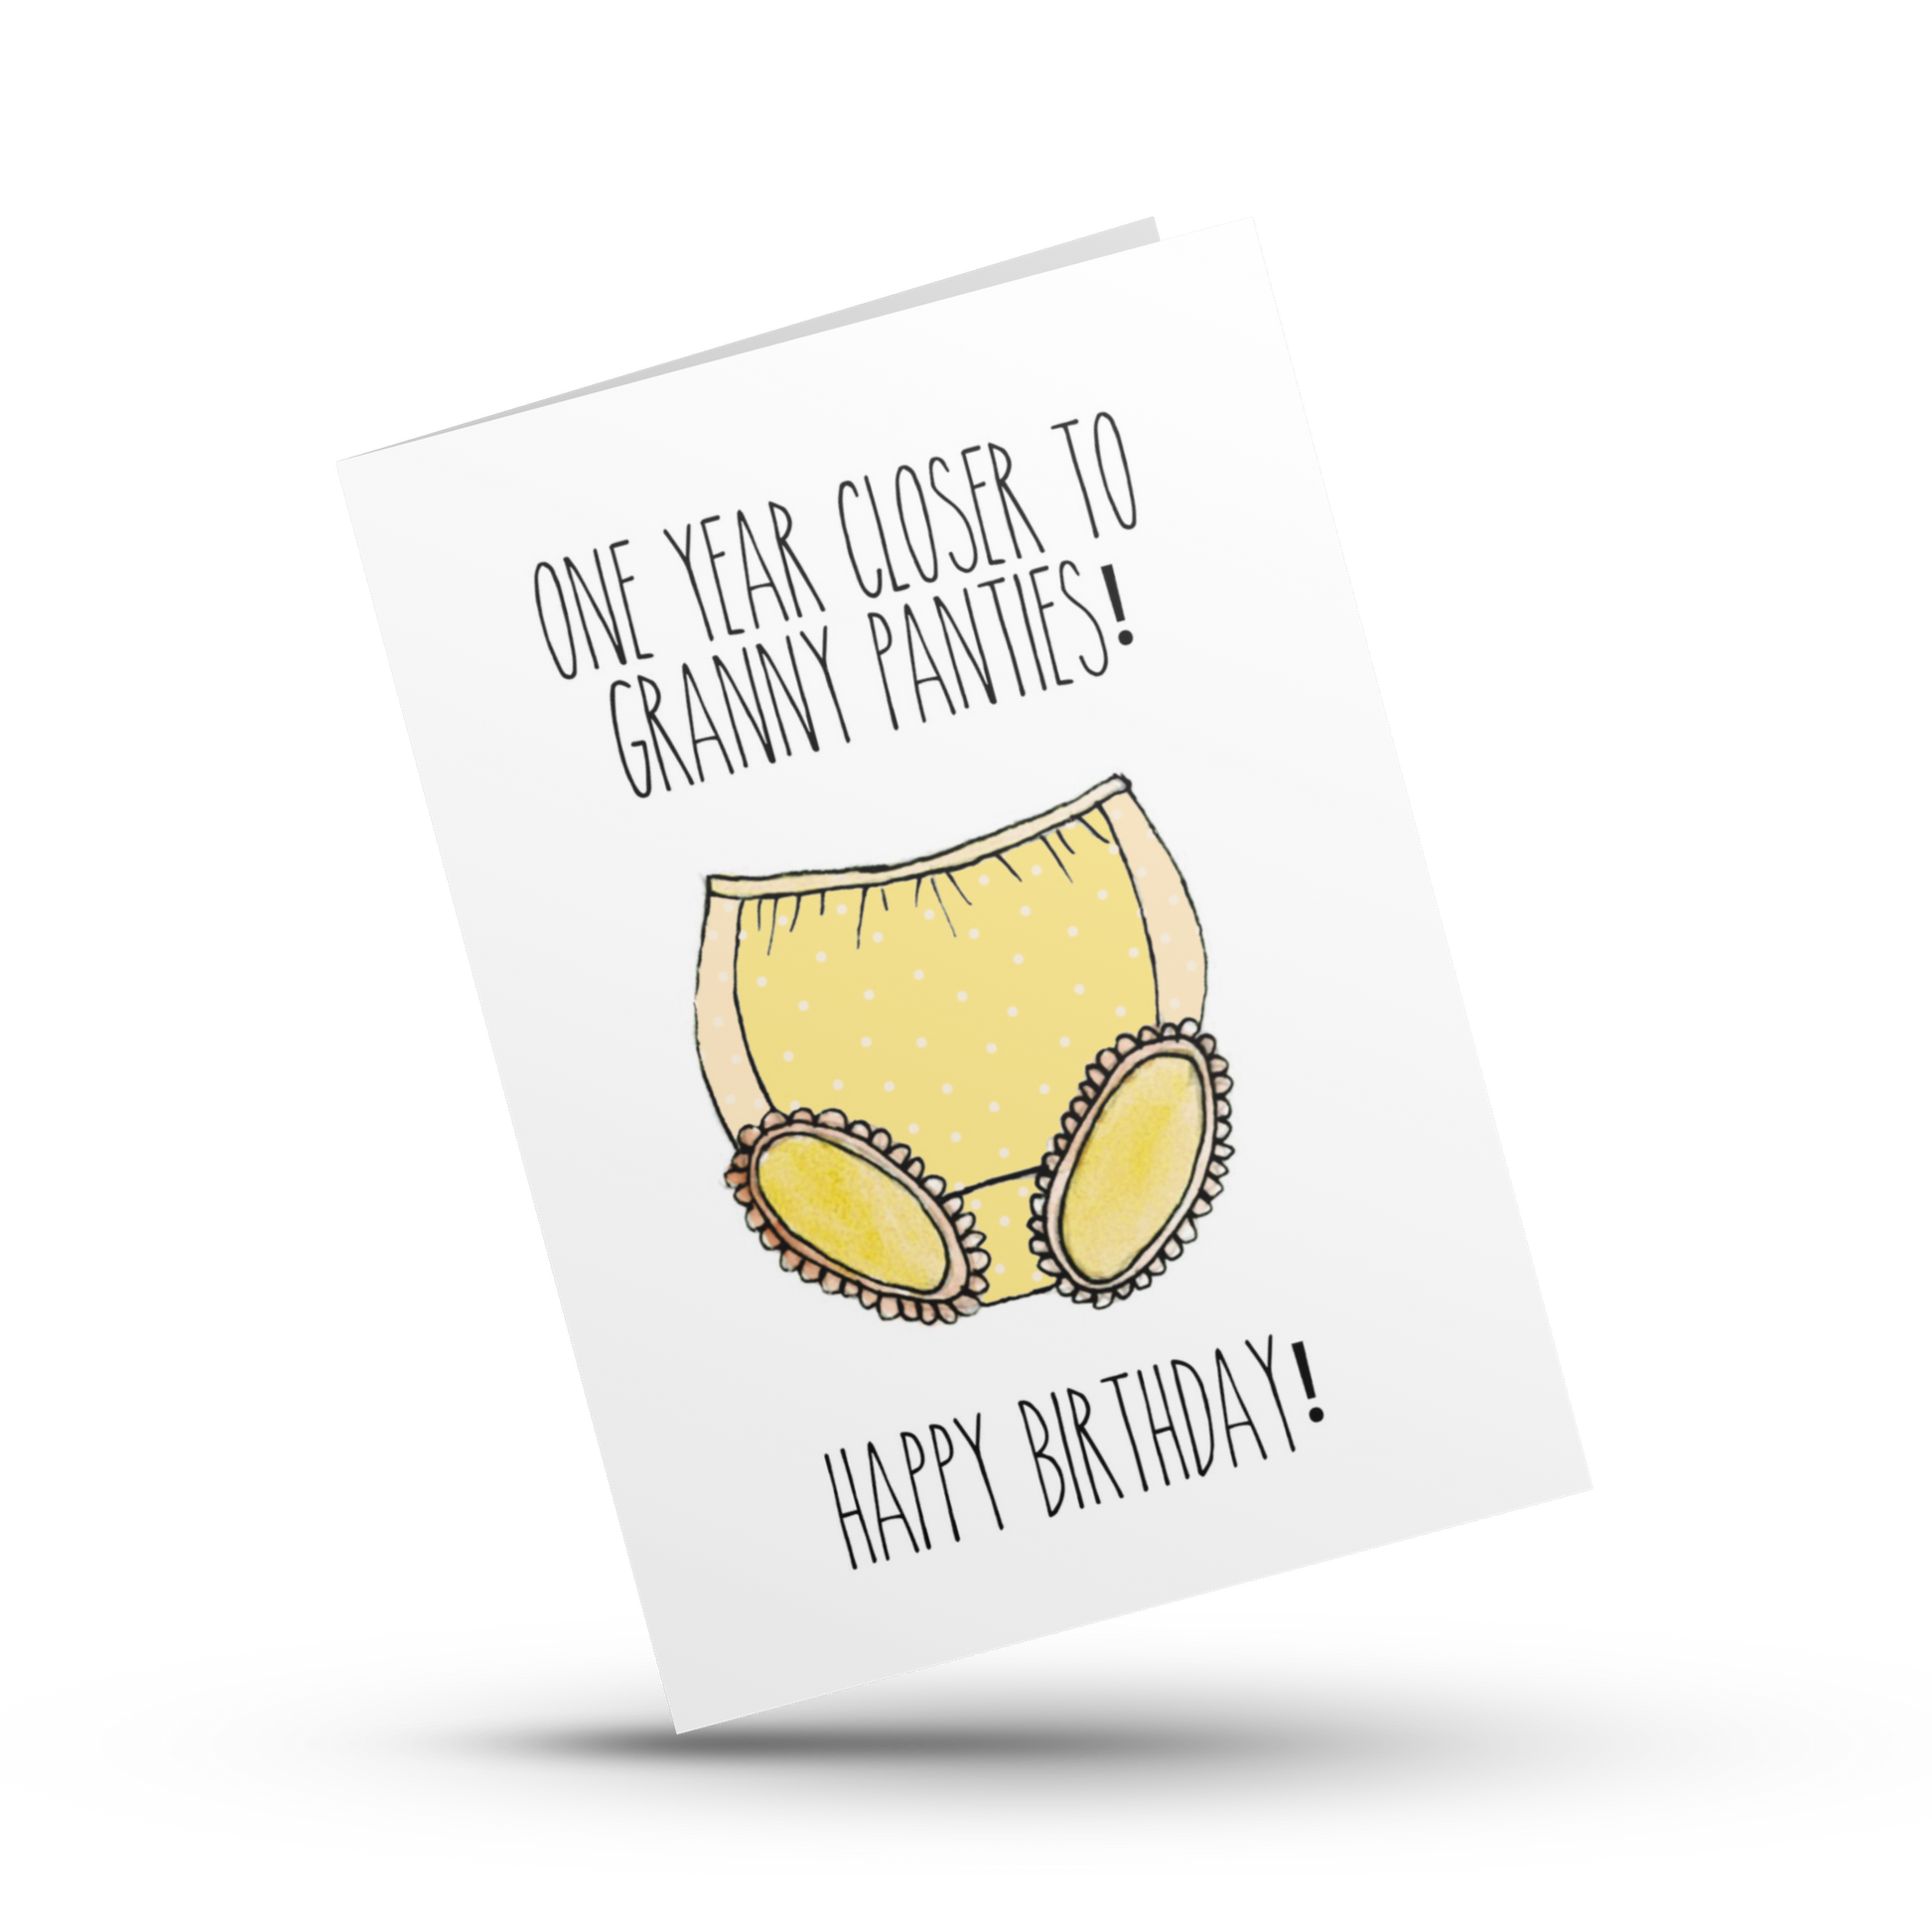 One year closer to granny panties, Funny birthday card, Birthday